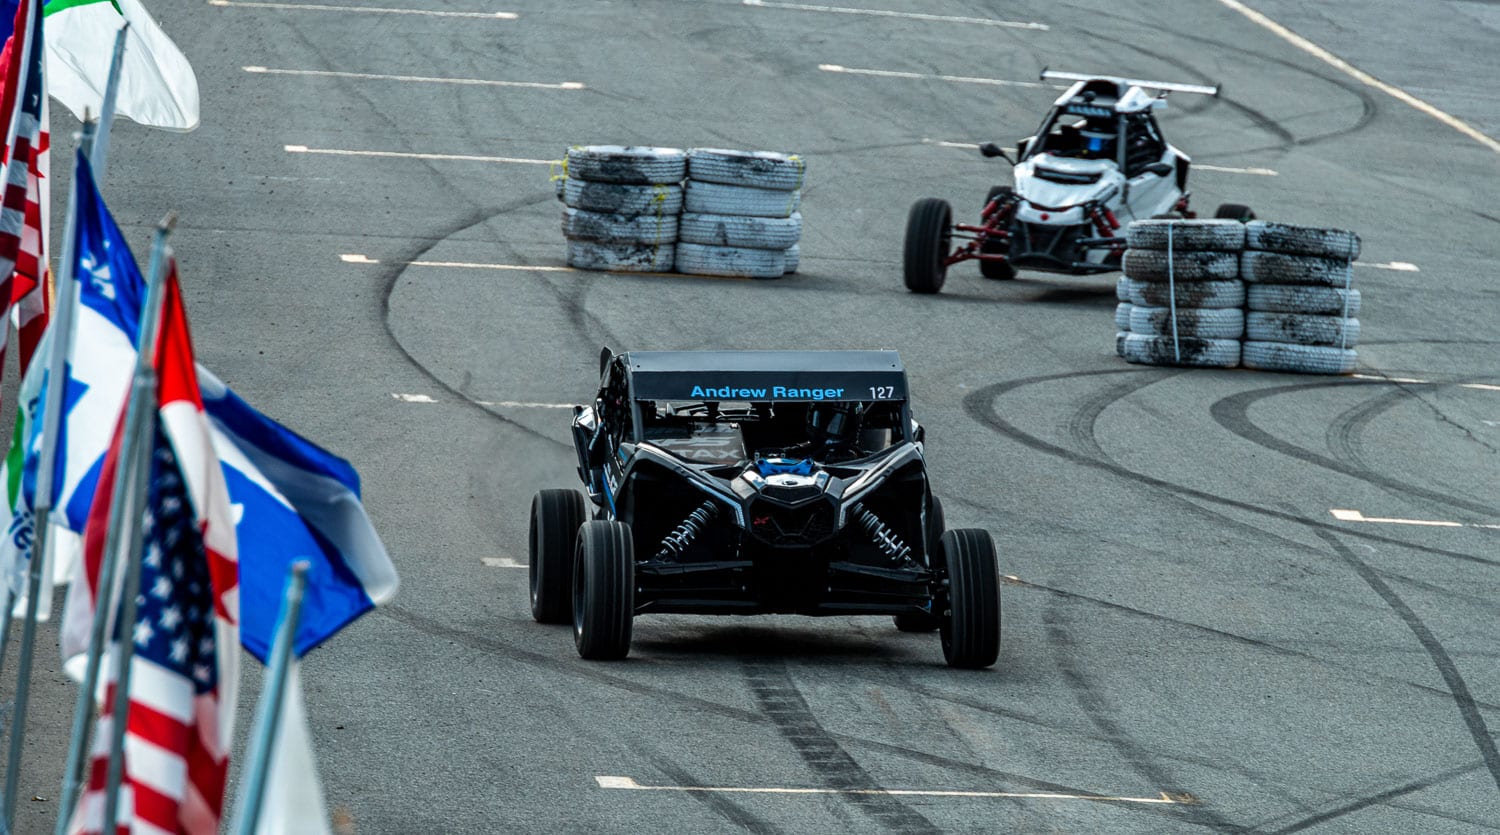 Superquads and SxS at the Grand Prix de Trois-Rivières